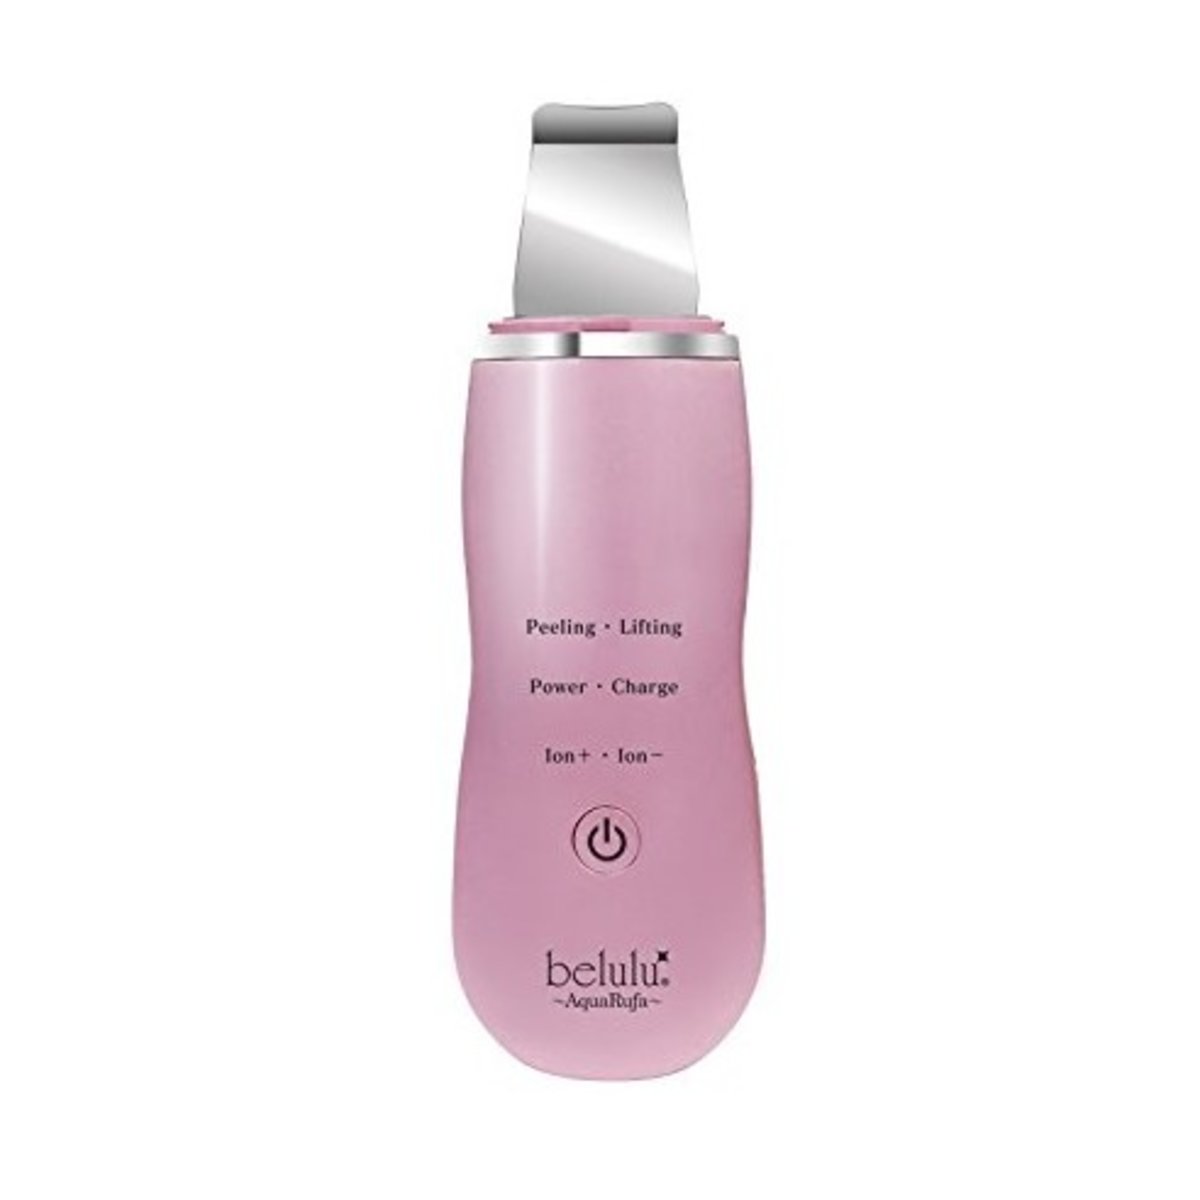 belulu - AquaRufa ultrasonic ion vibration export and import skin scraping tool - pink 